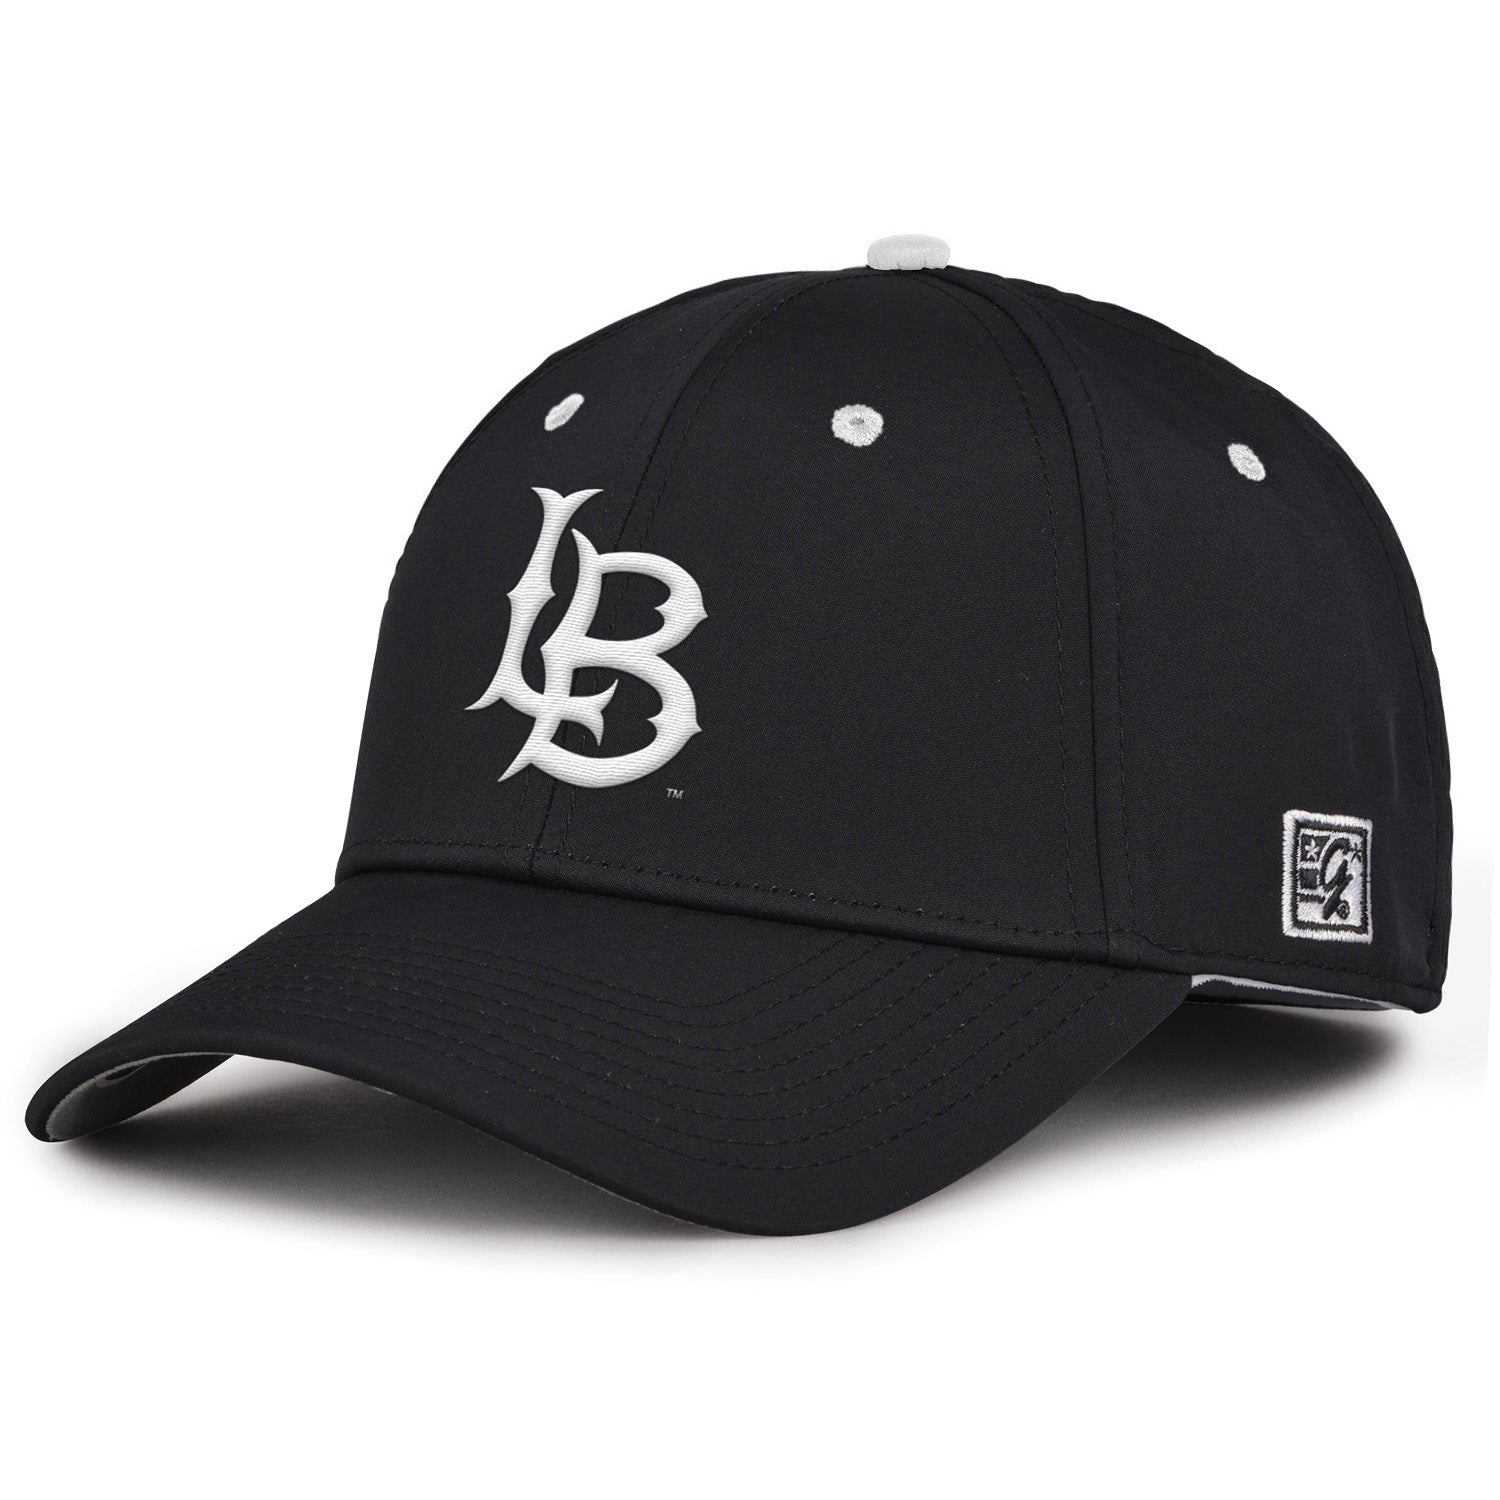 LB Beach Caret Pro Cap - Black/ White, The Game – Long Beach State